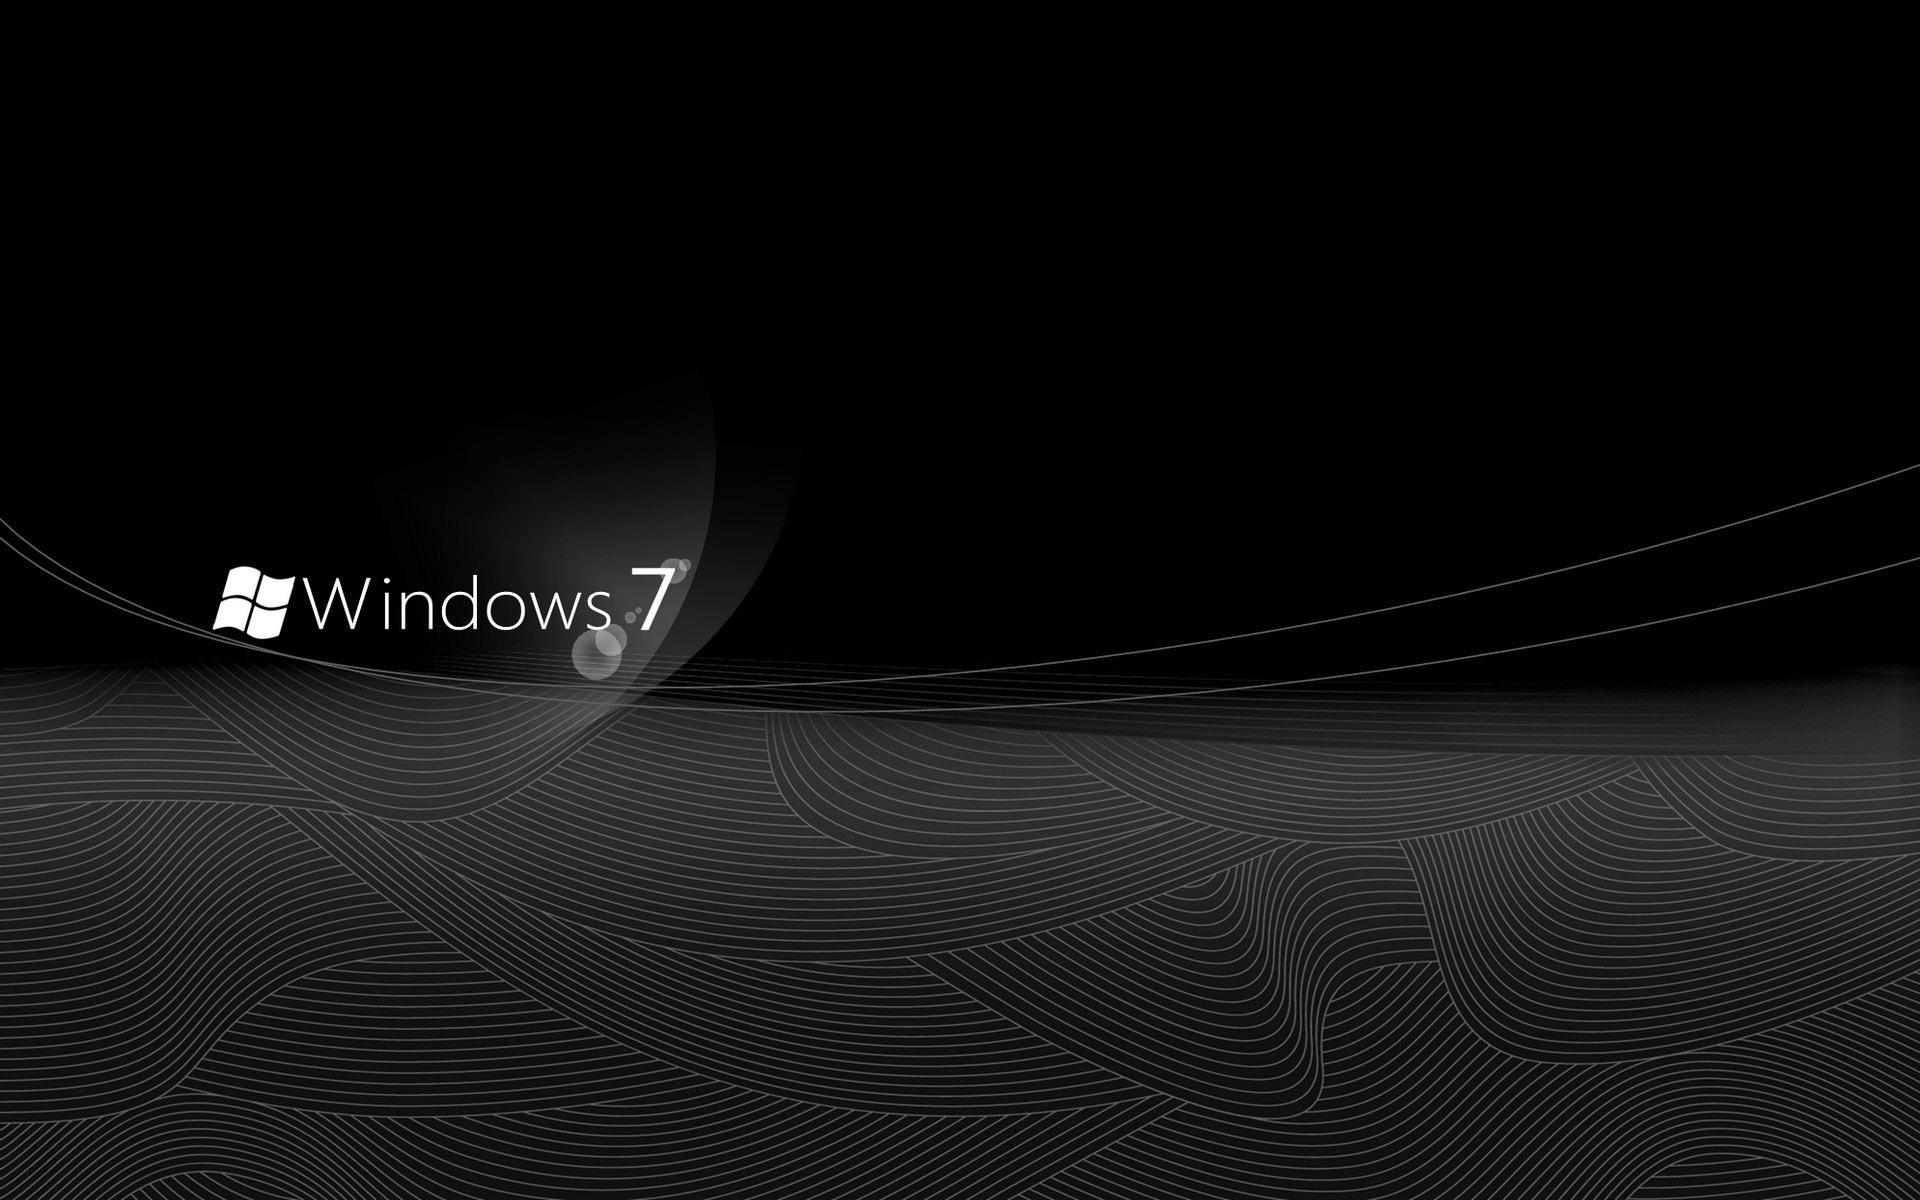 Windows 7 Elegant black Desktop Wallpaper. High Quality